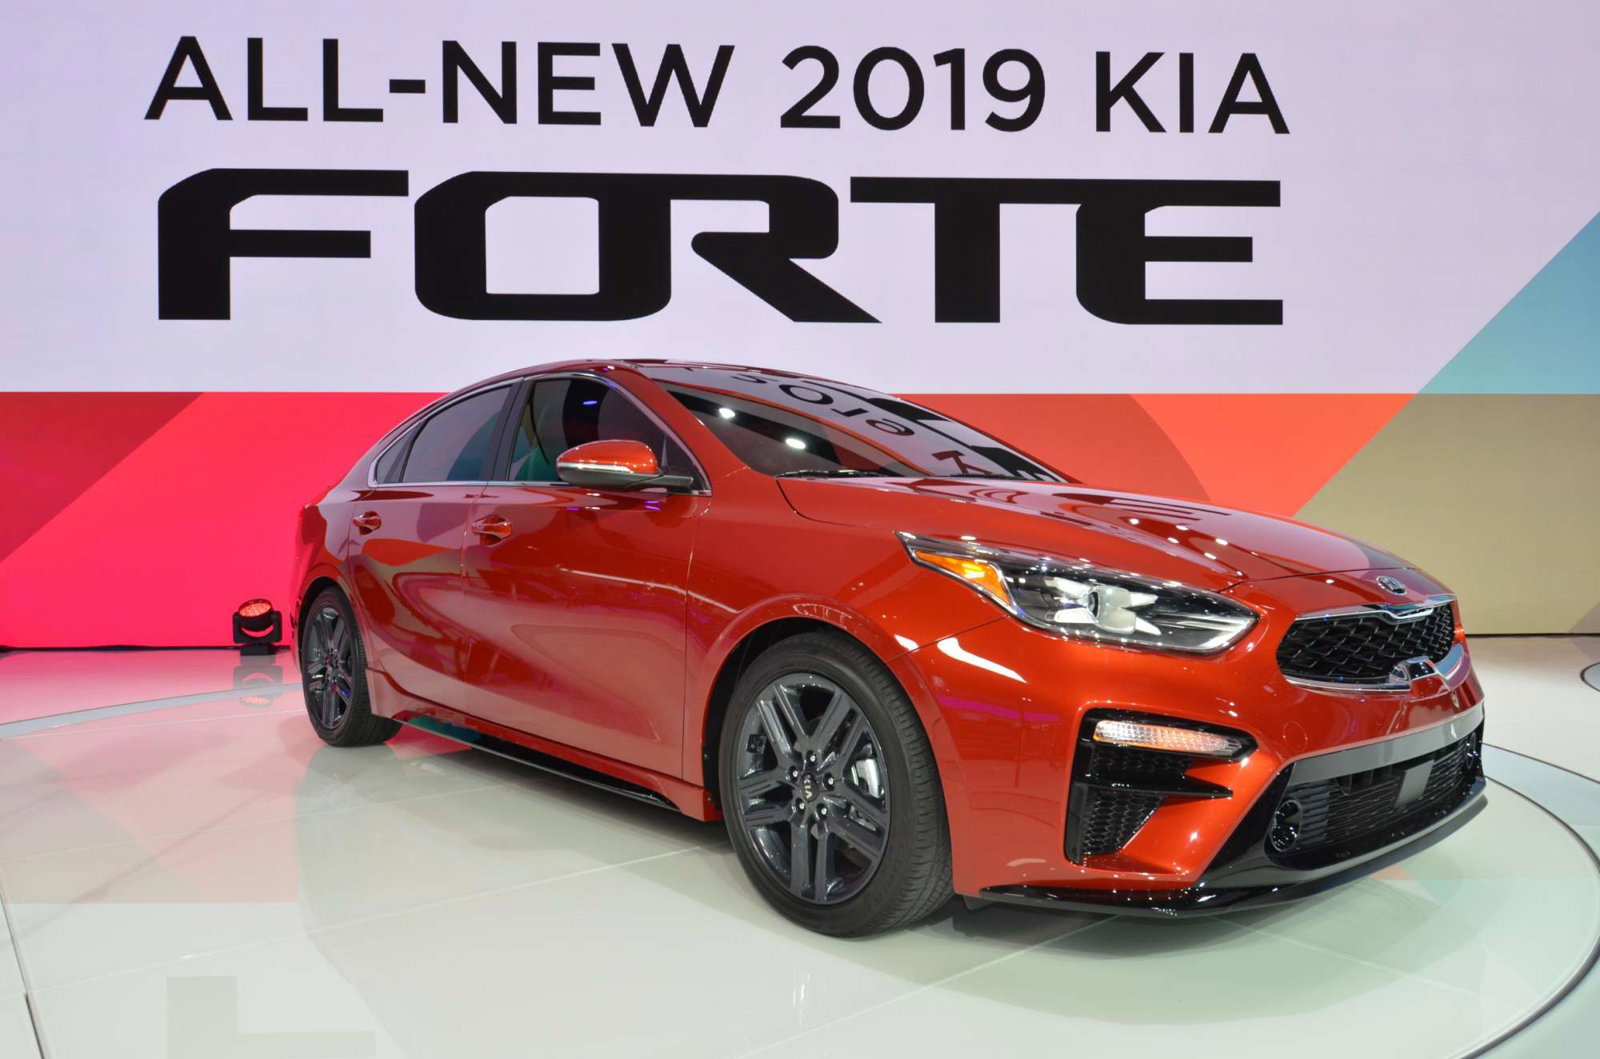 2019 Kia Forte offers Stinger-flavored design for budget-minded ...